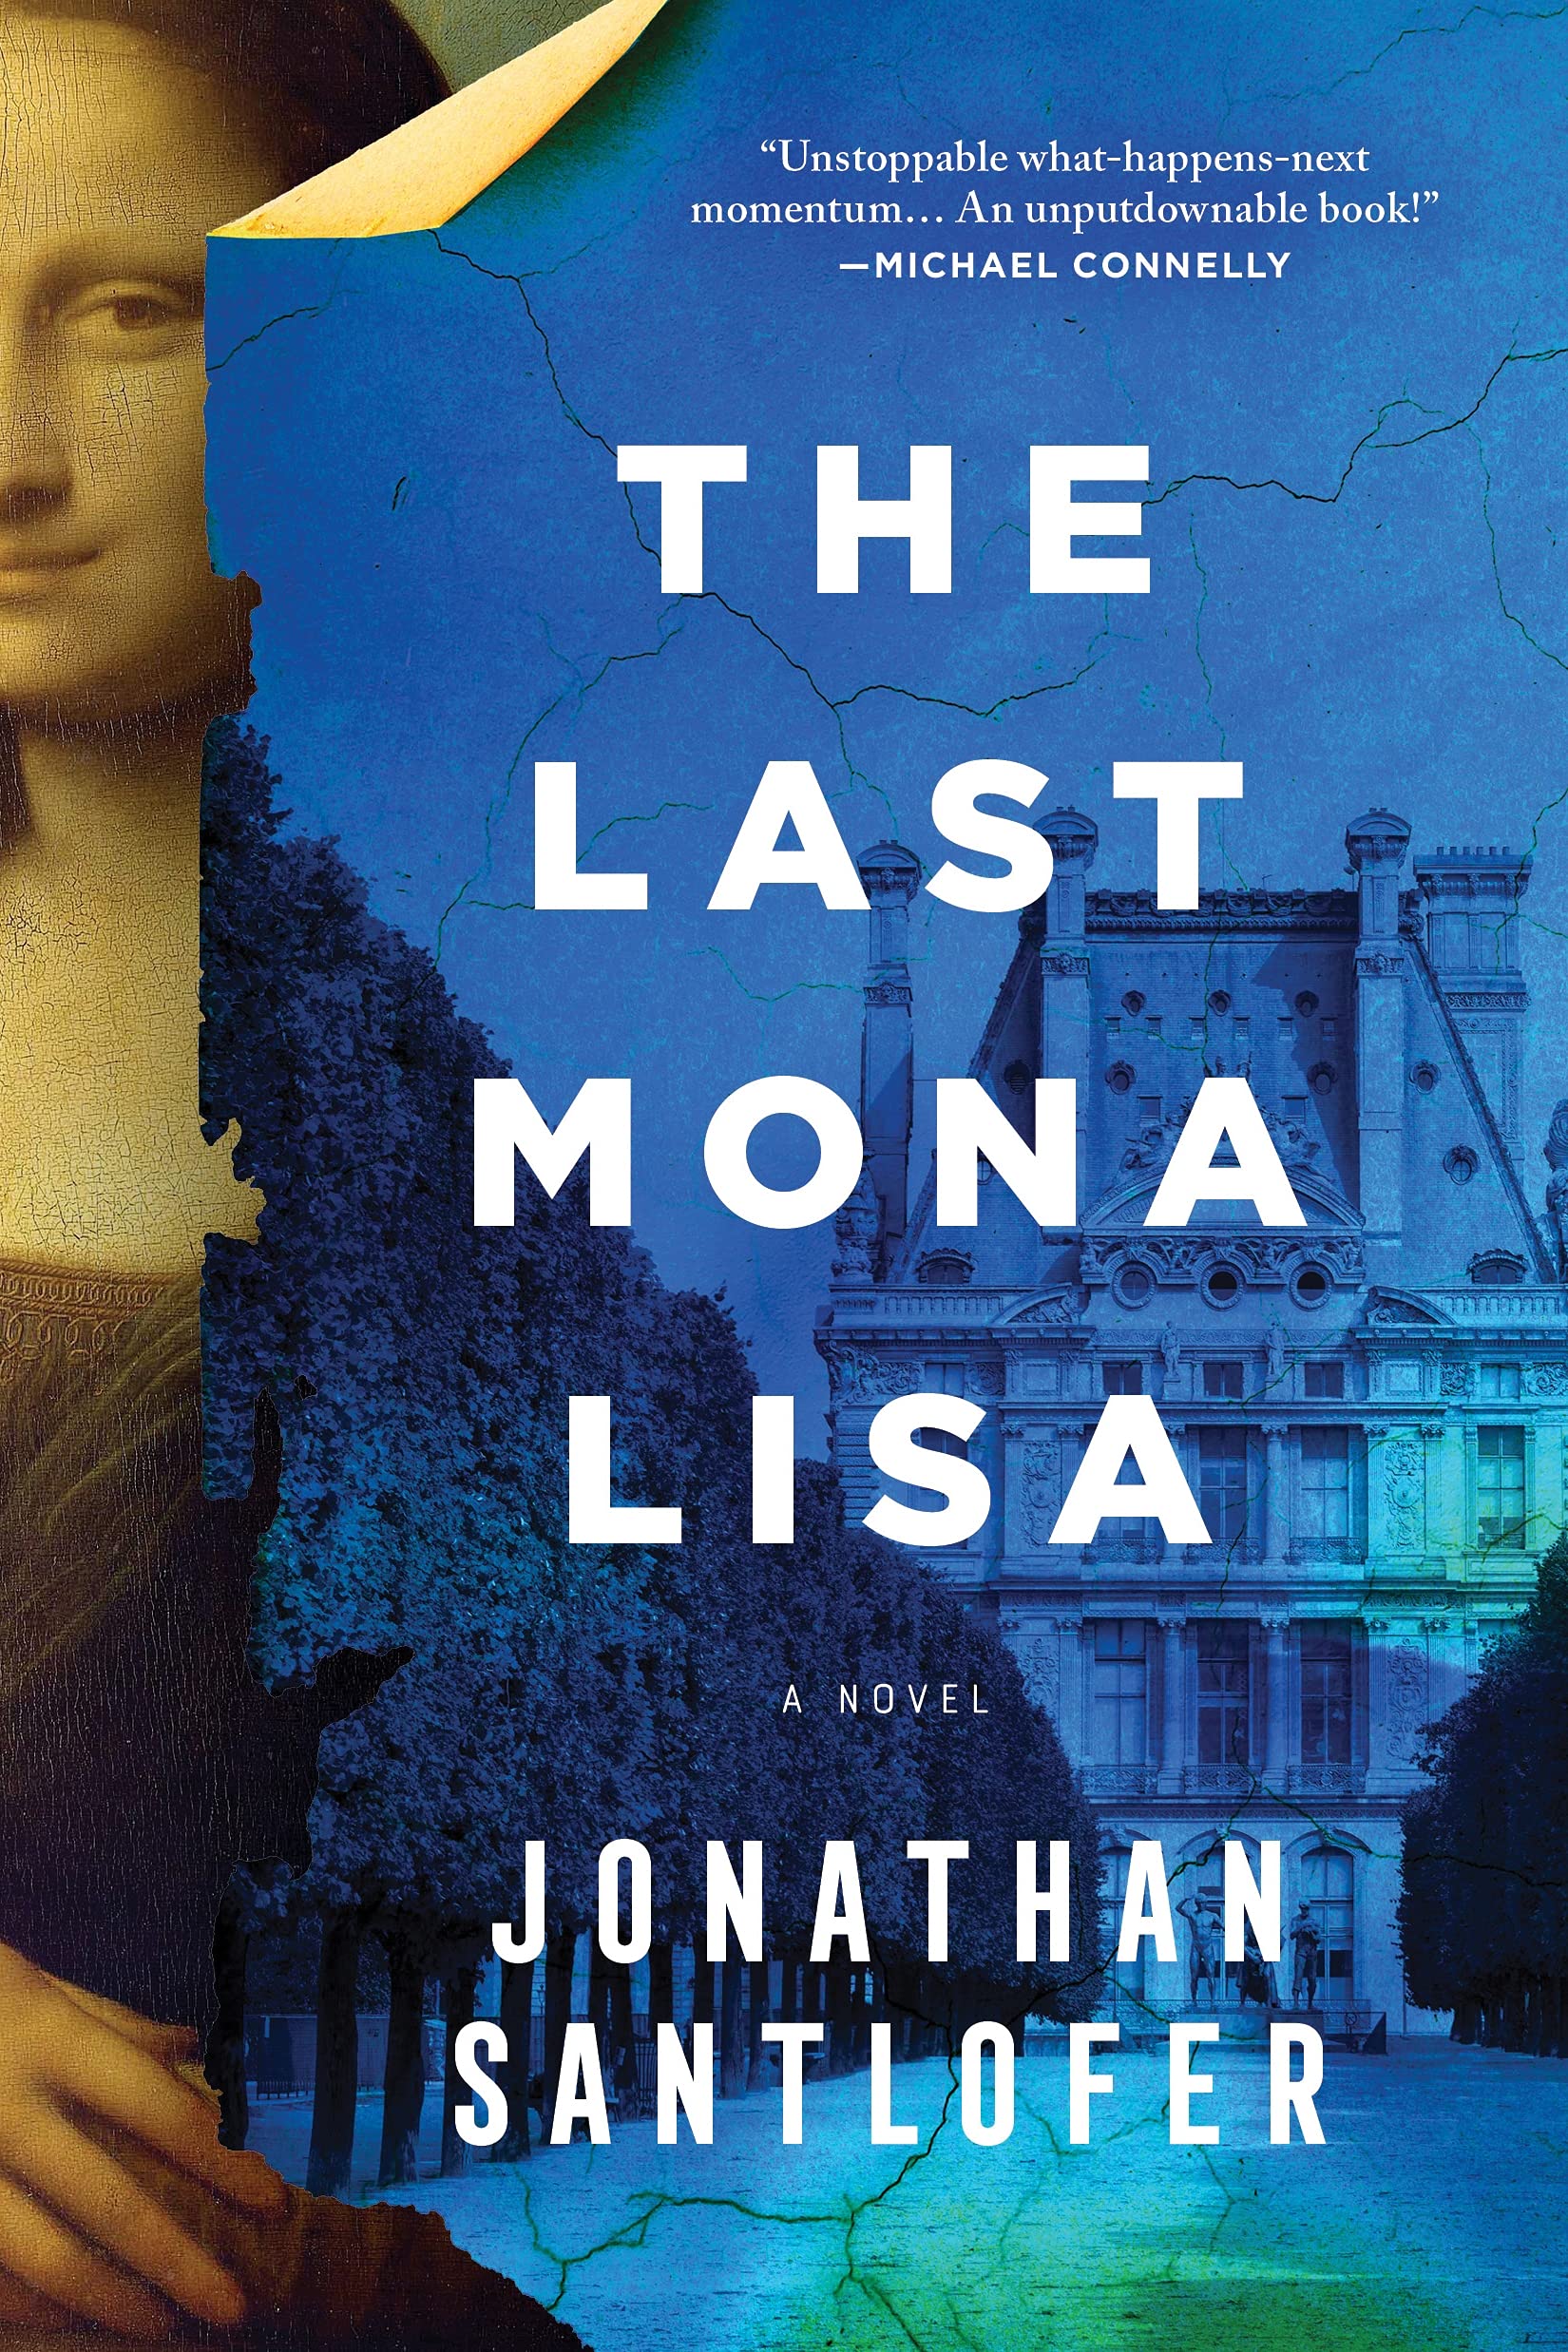 Image for "The Last Mona Lisa"